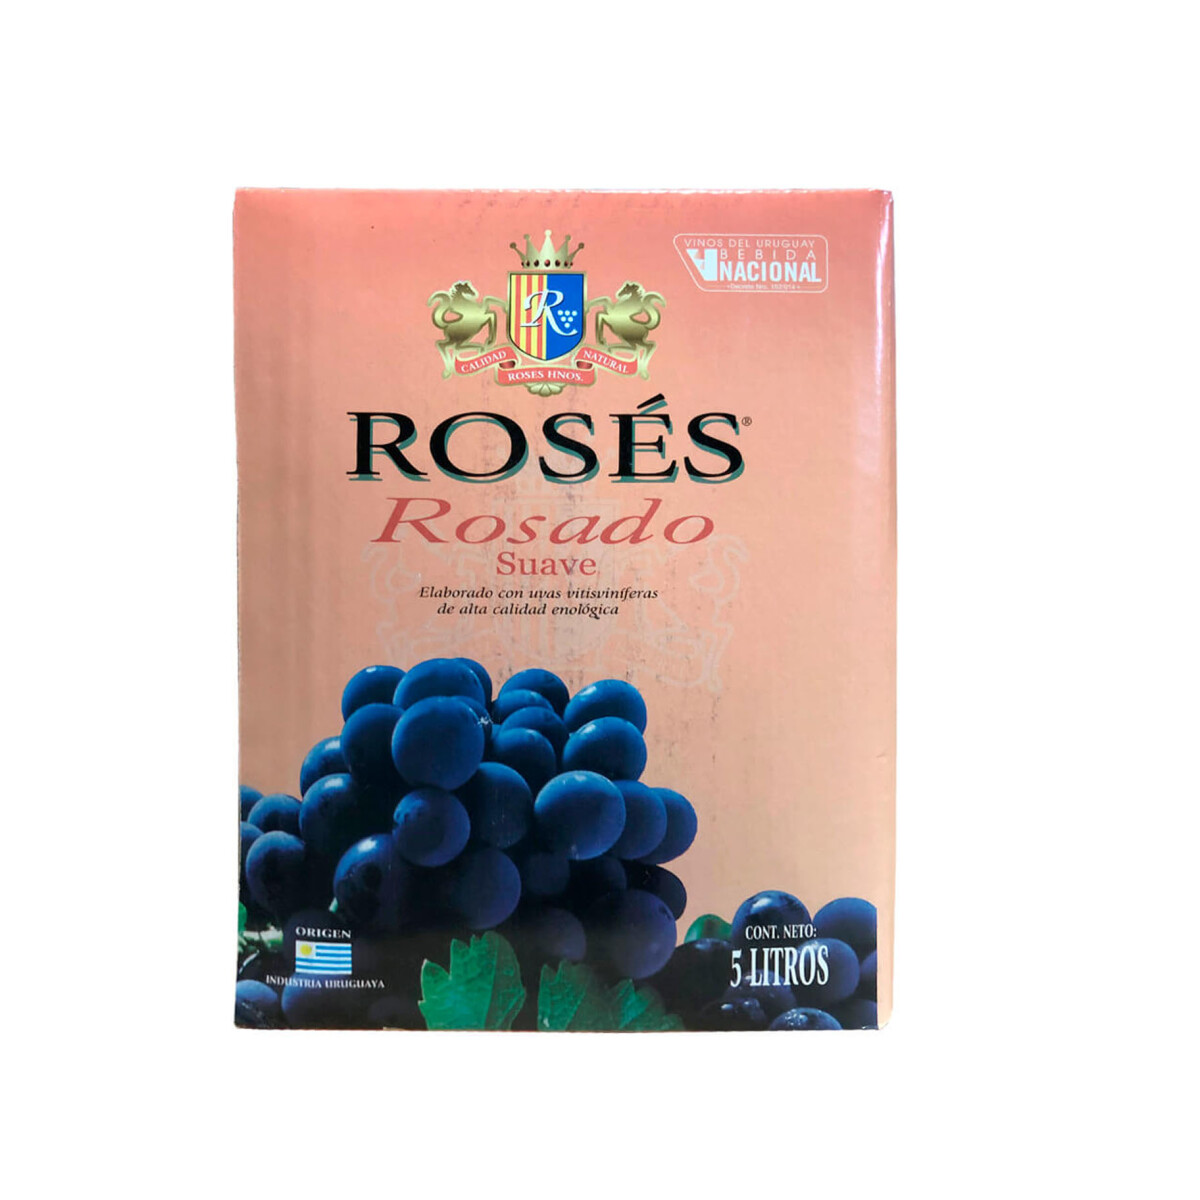 Vino roses 5L - Rosado dulce 